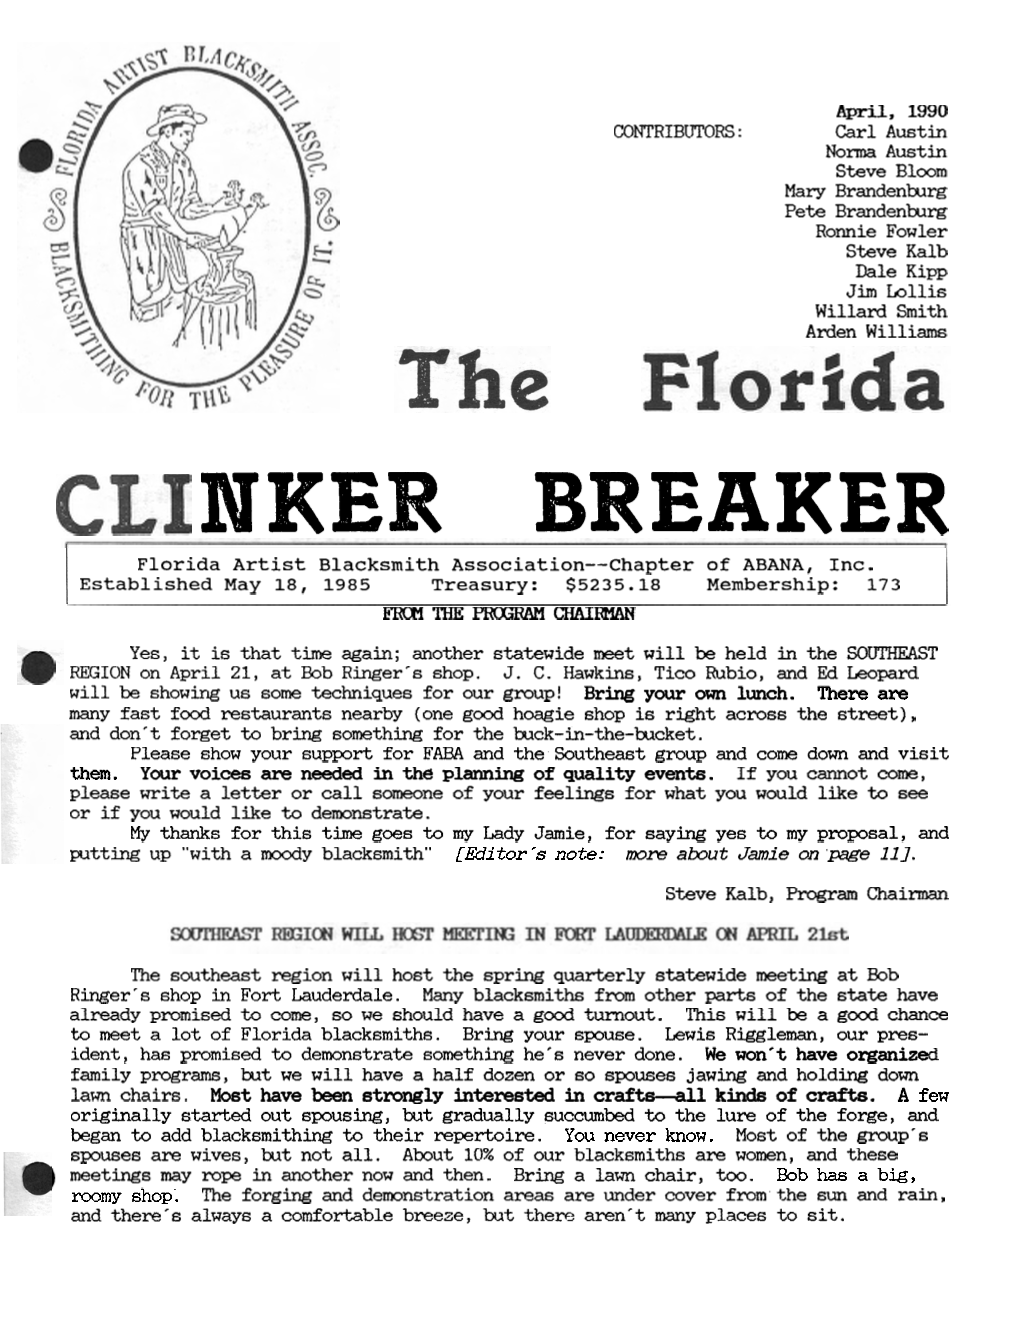 NKEIR BREAKER Florida Artist Blacksmith Association--Chapter of ABANA, Inc